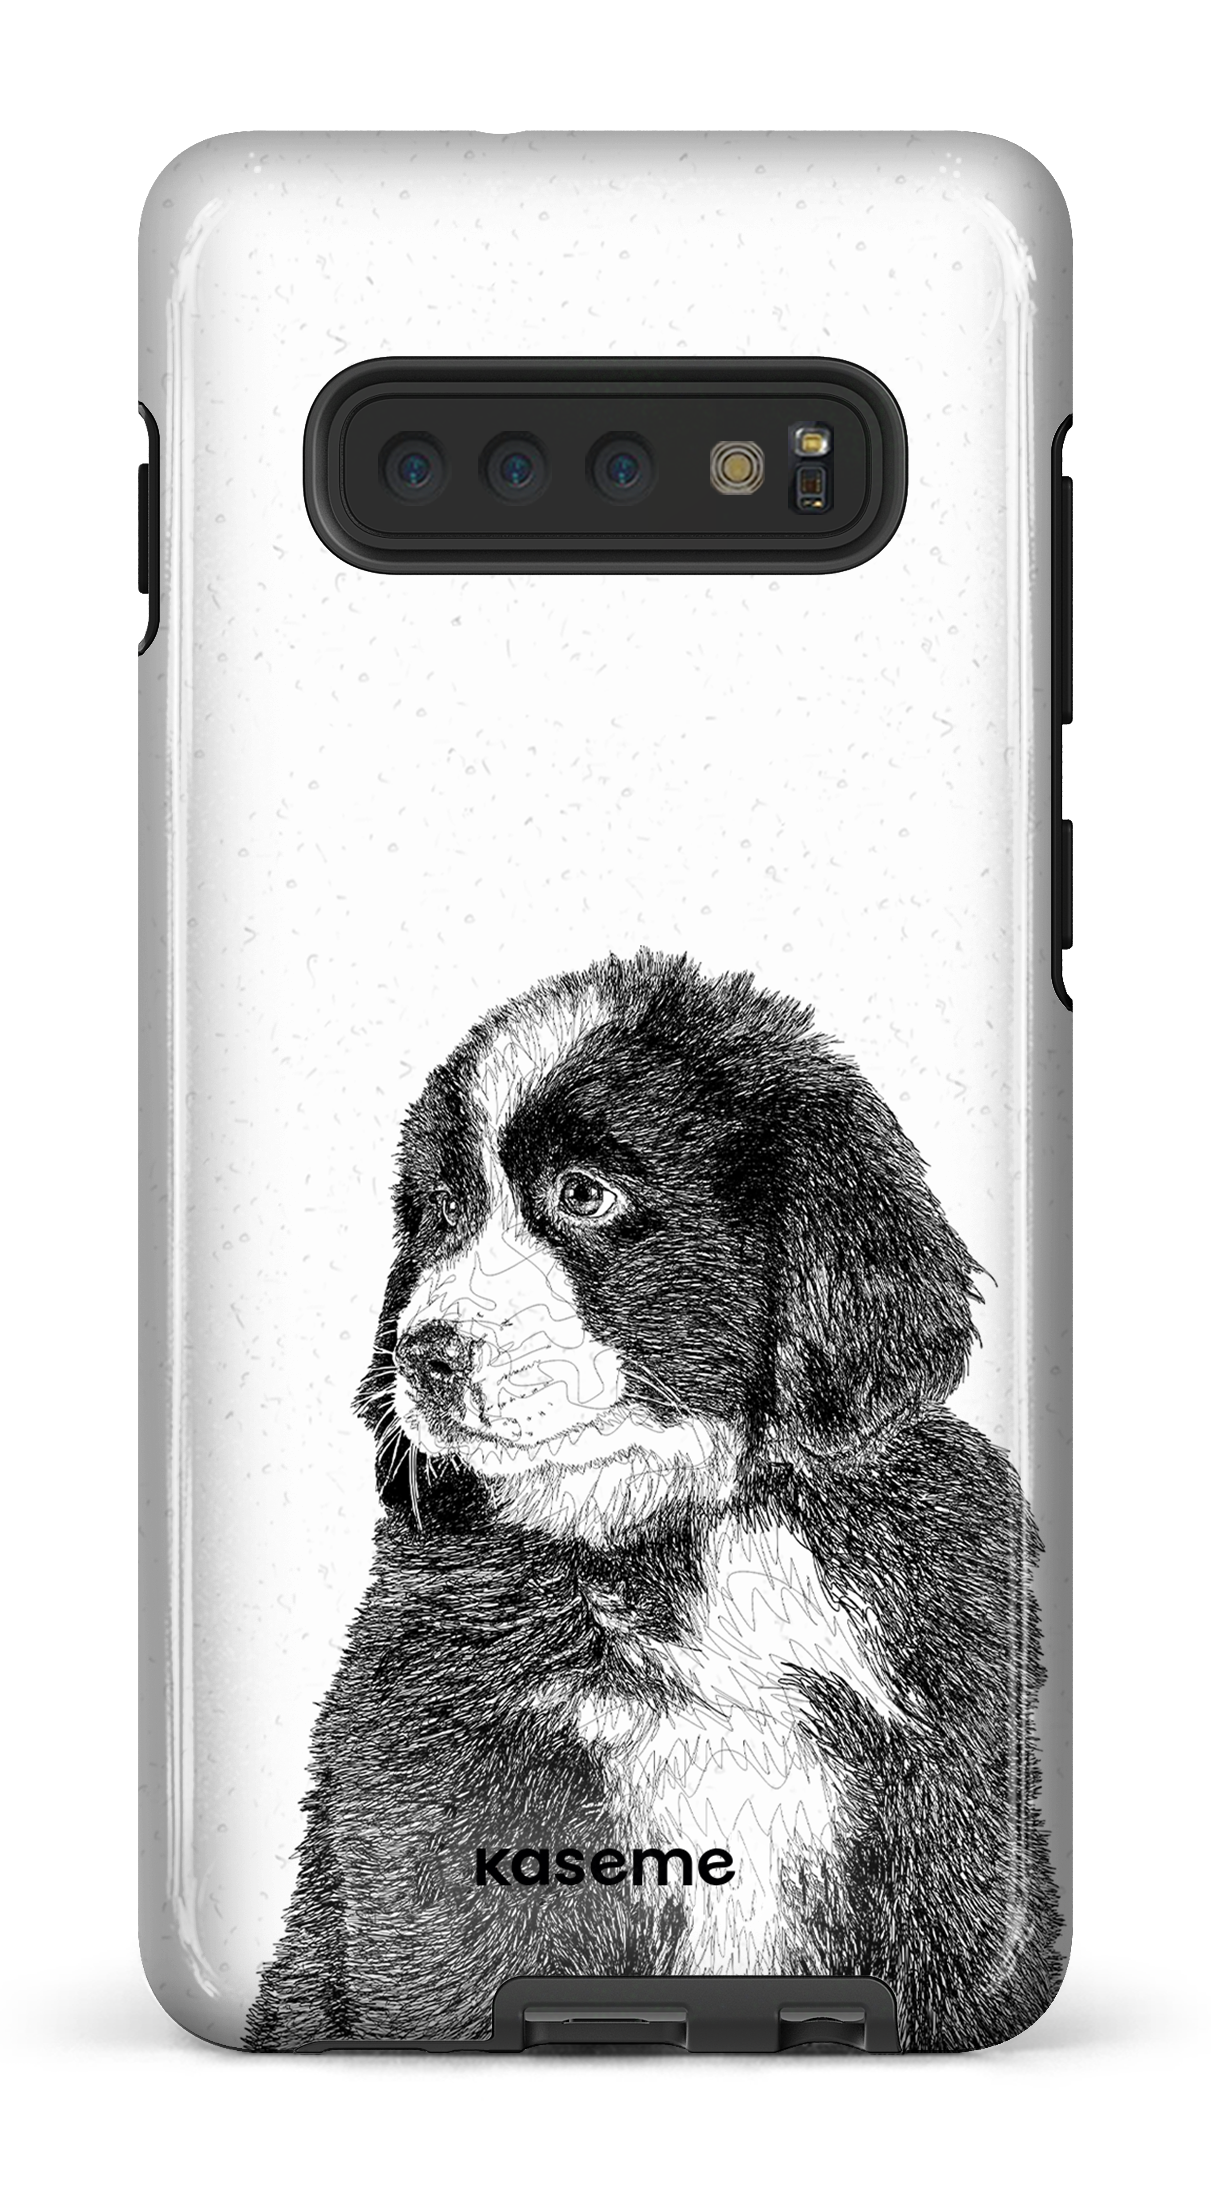 Bernese Mountain Dog - Galaxy S10 Plus